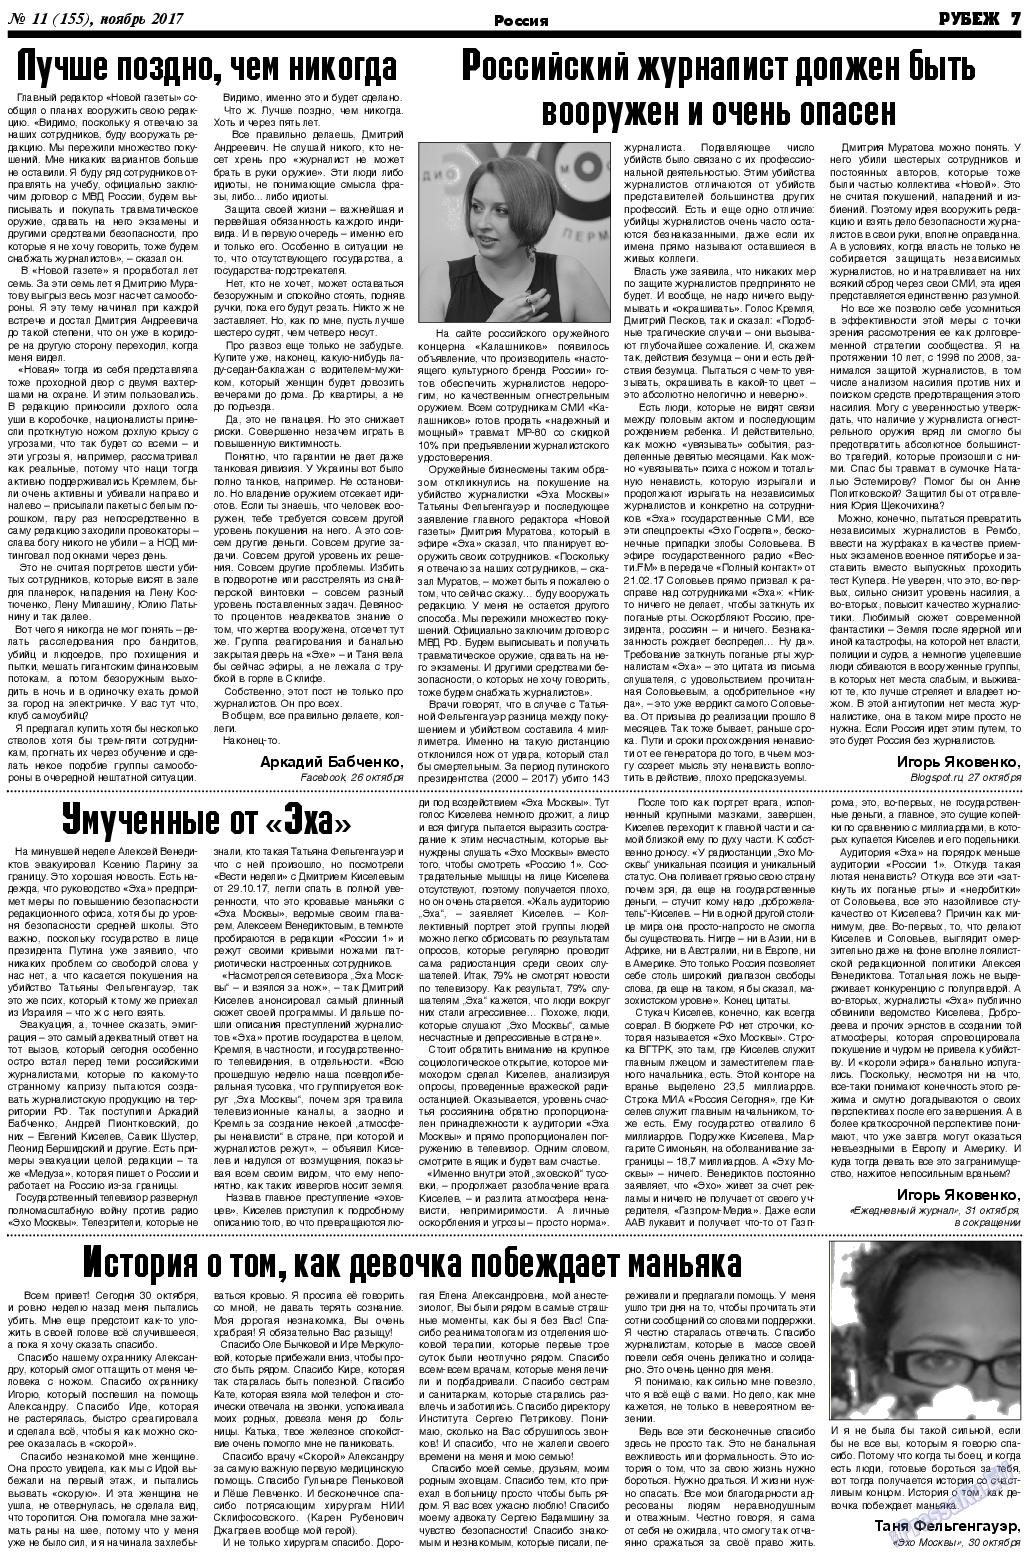 Рубеж, газета. 2017 №11 стр.7